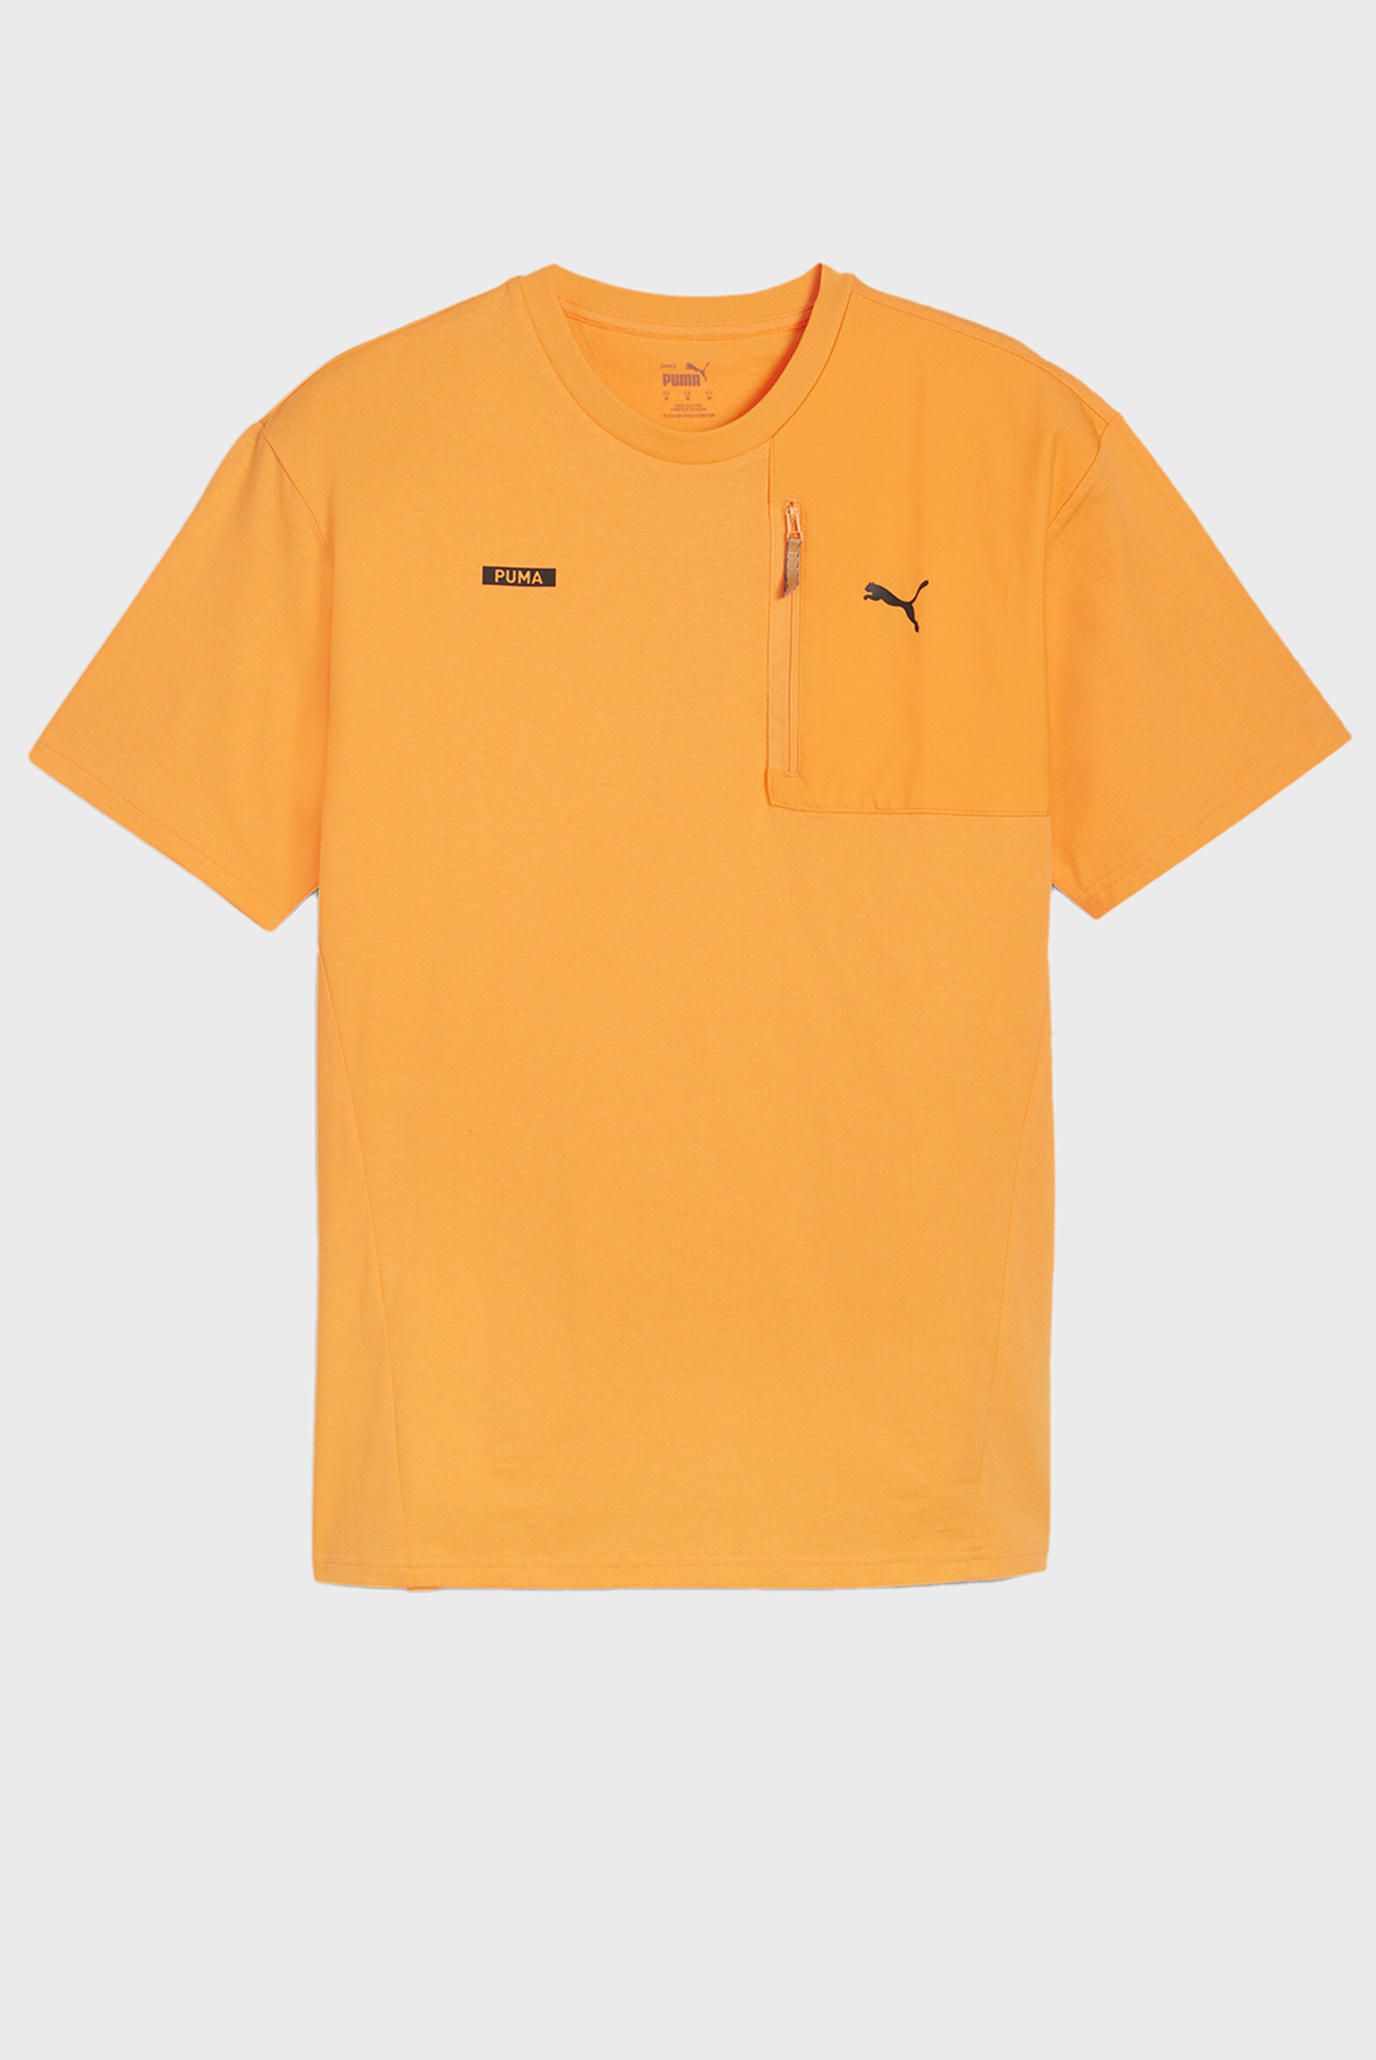 Мужская оранжевая футболка DESERT ROAD Men's Tee 1